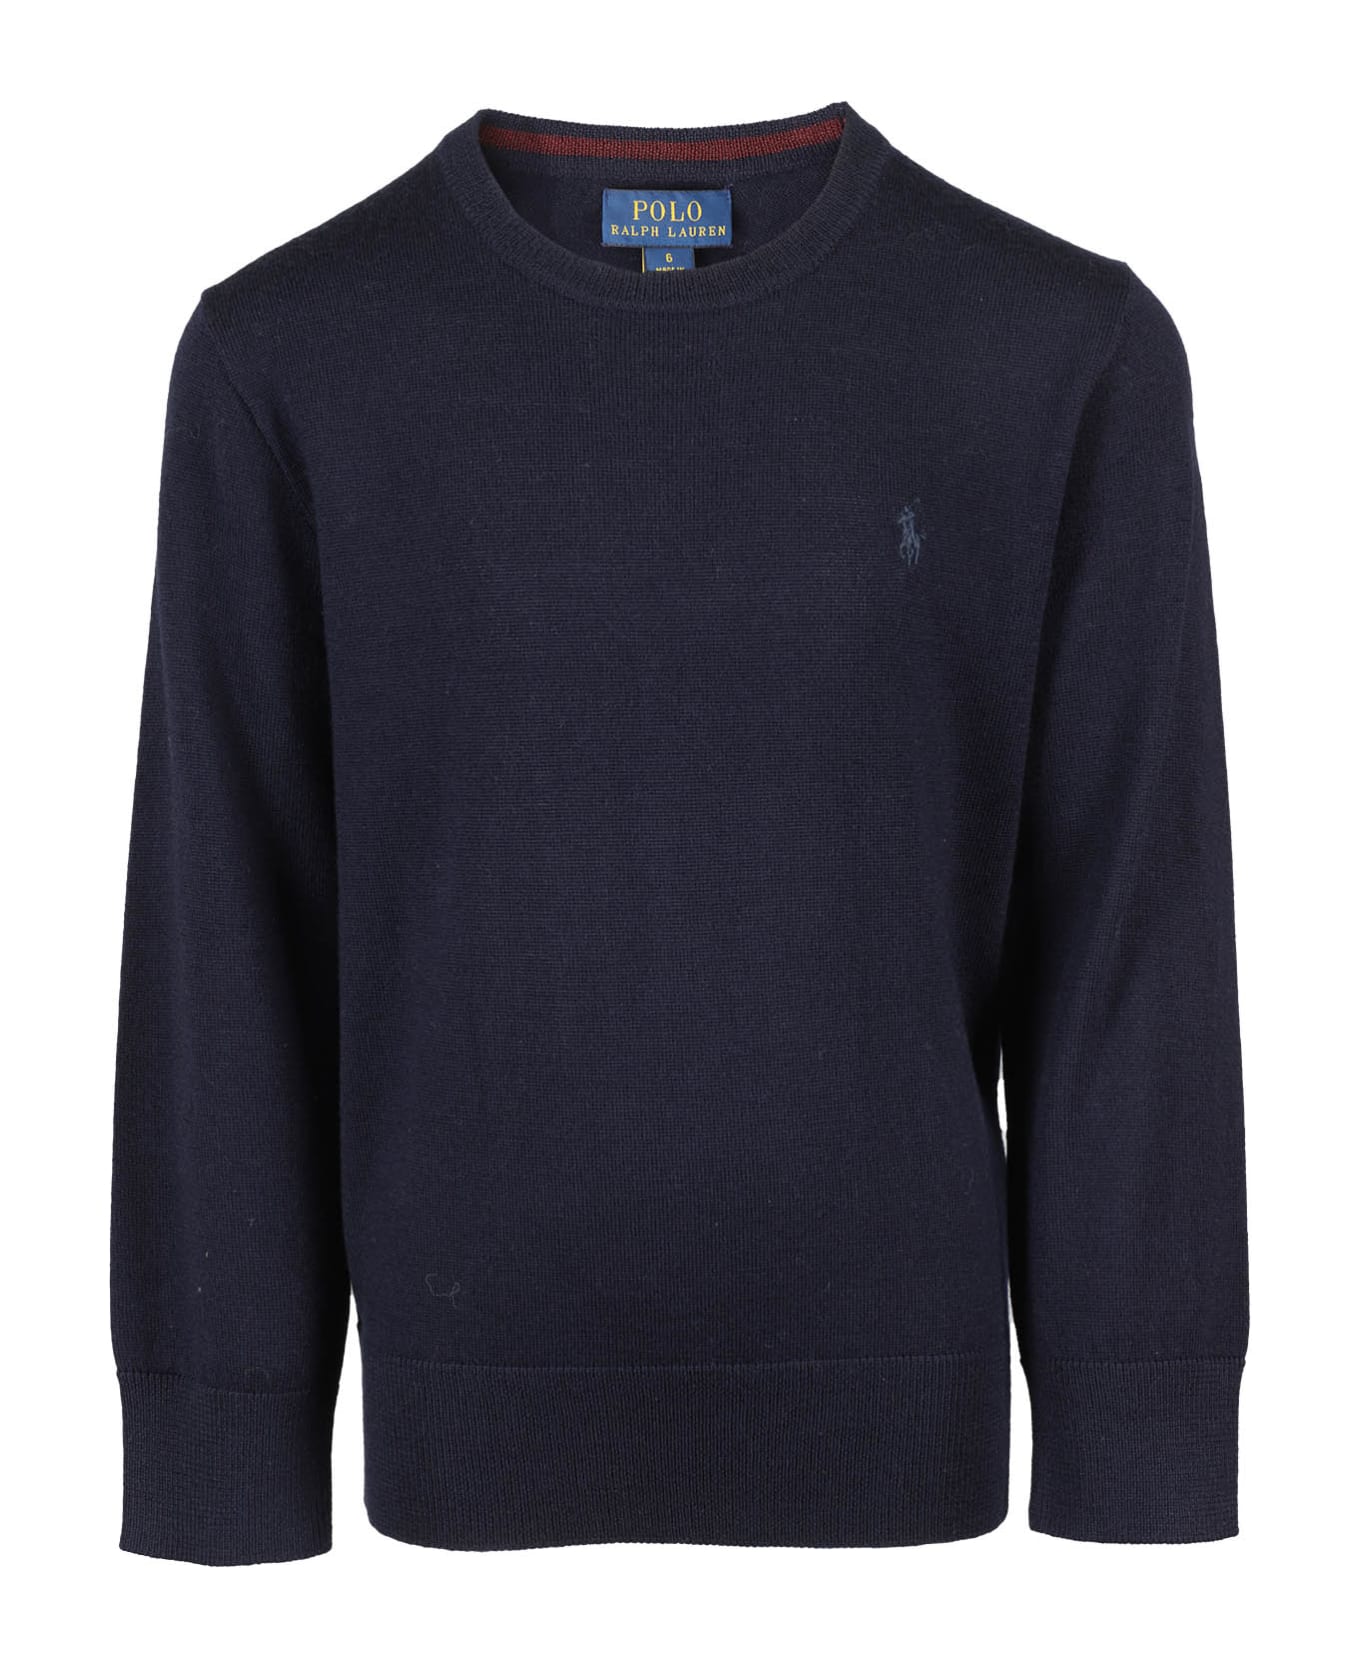 Polo Ralph Lauren Sweater - Navy